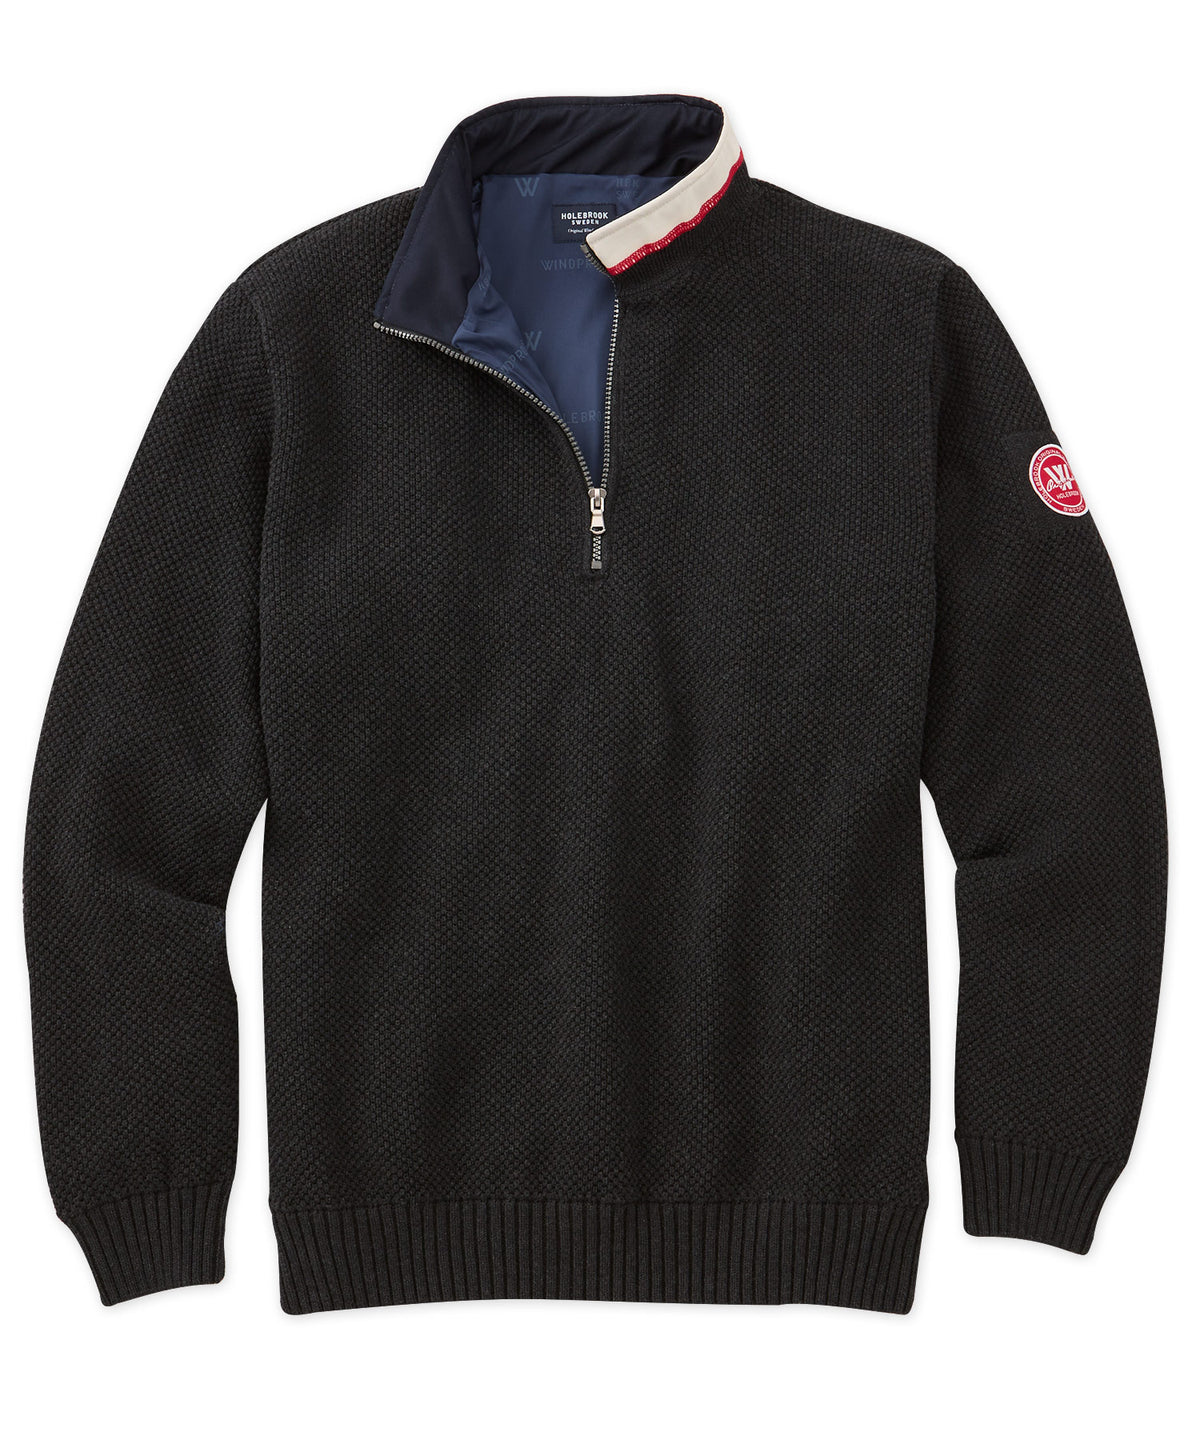 Holebrook Sweden Classic Windproof Cotton Quarter-Zip Sweater, Men's Big & Tall